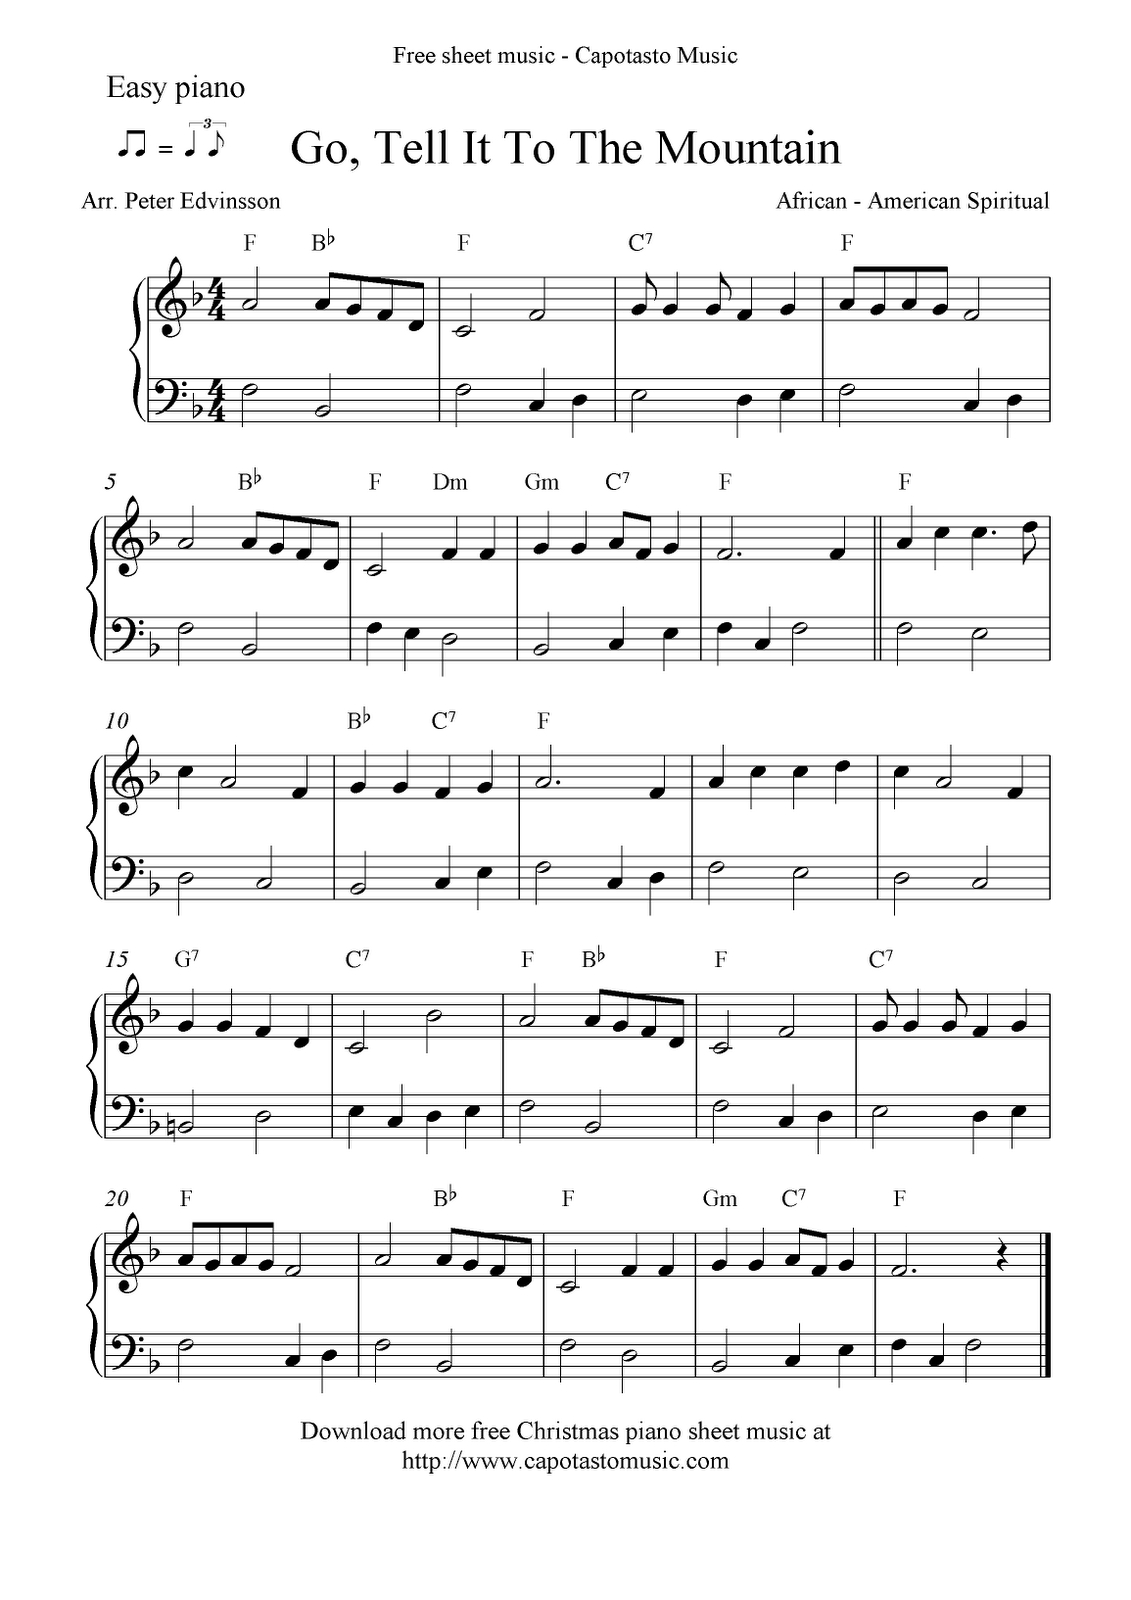 Free Printable Piano Sheet Music | Free Sheet Music Scores: Easy - Free Printable Christmas Sheet Music For Piano